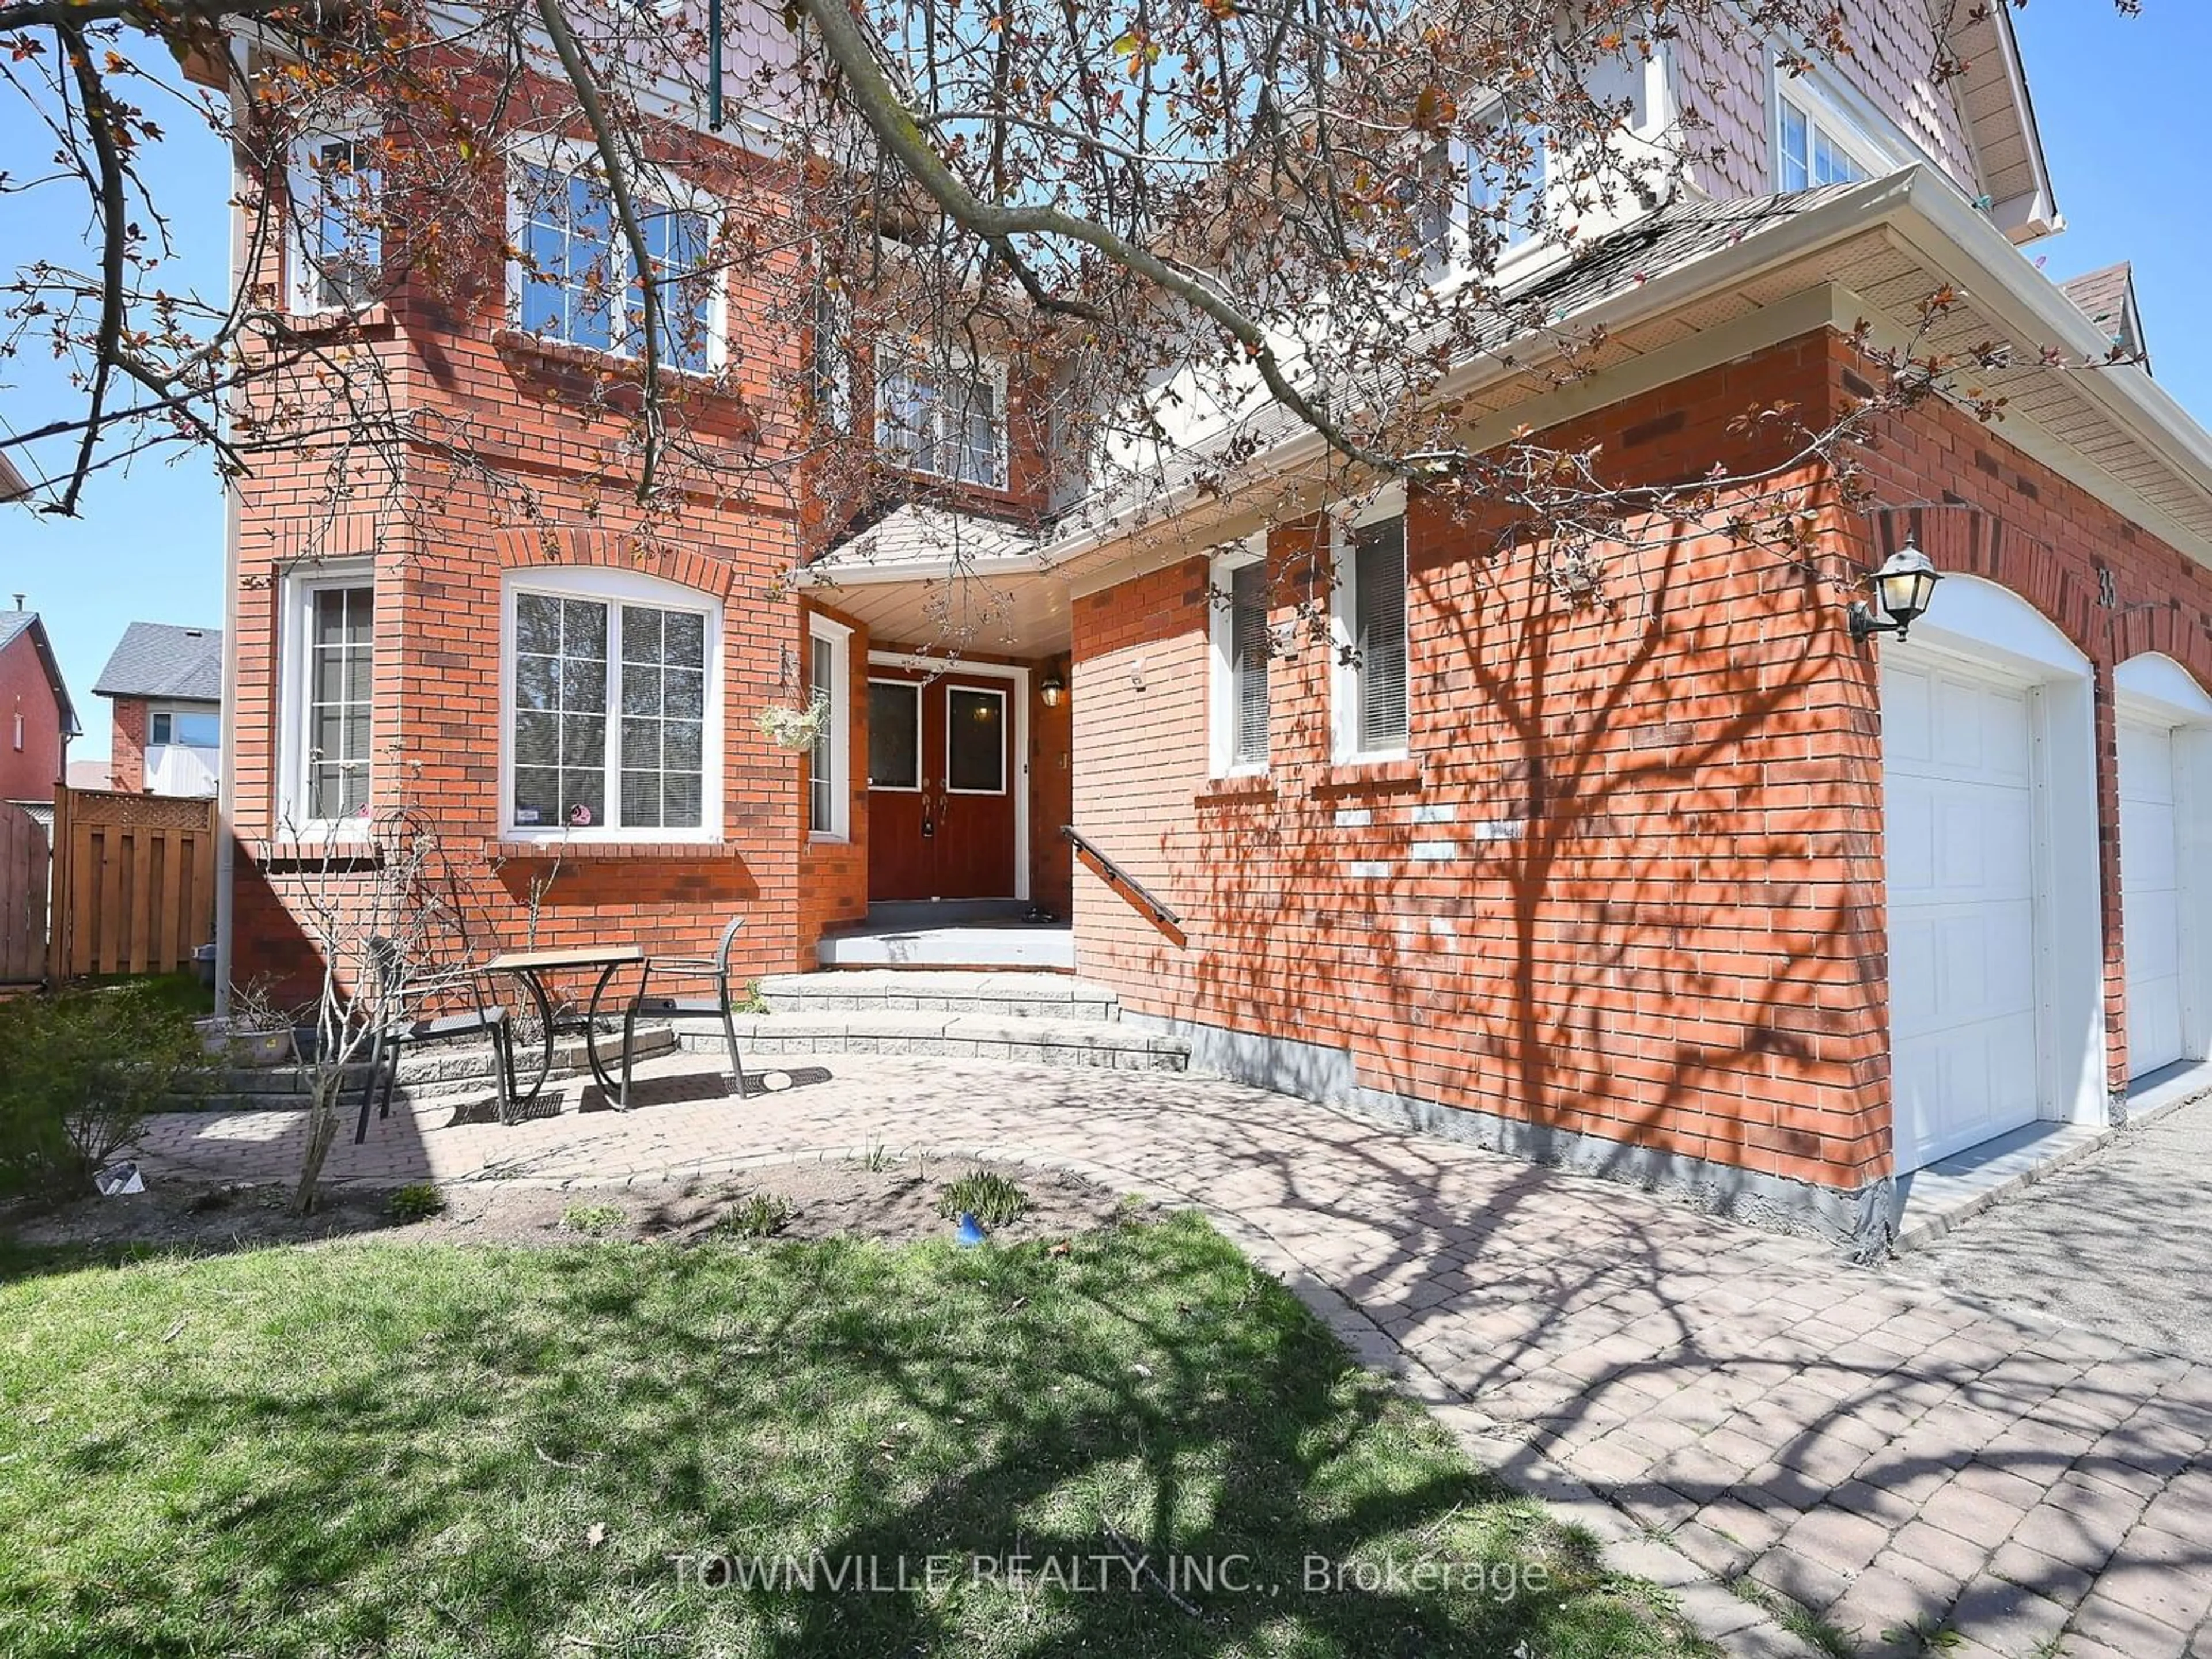 Home with brick exterior material for 35 Red Cedar Cres, Brampton Ontario L6R 1A7